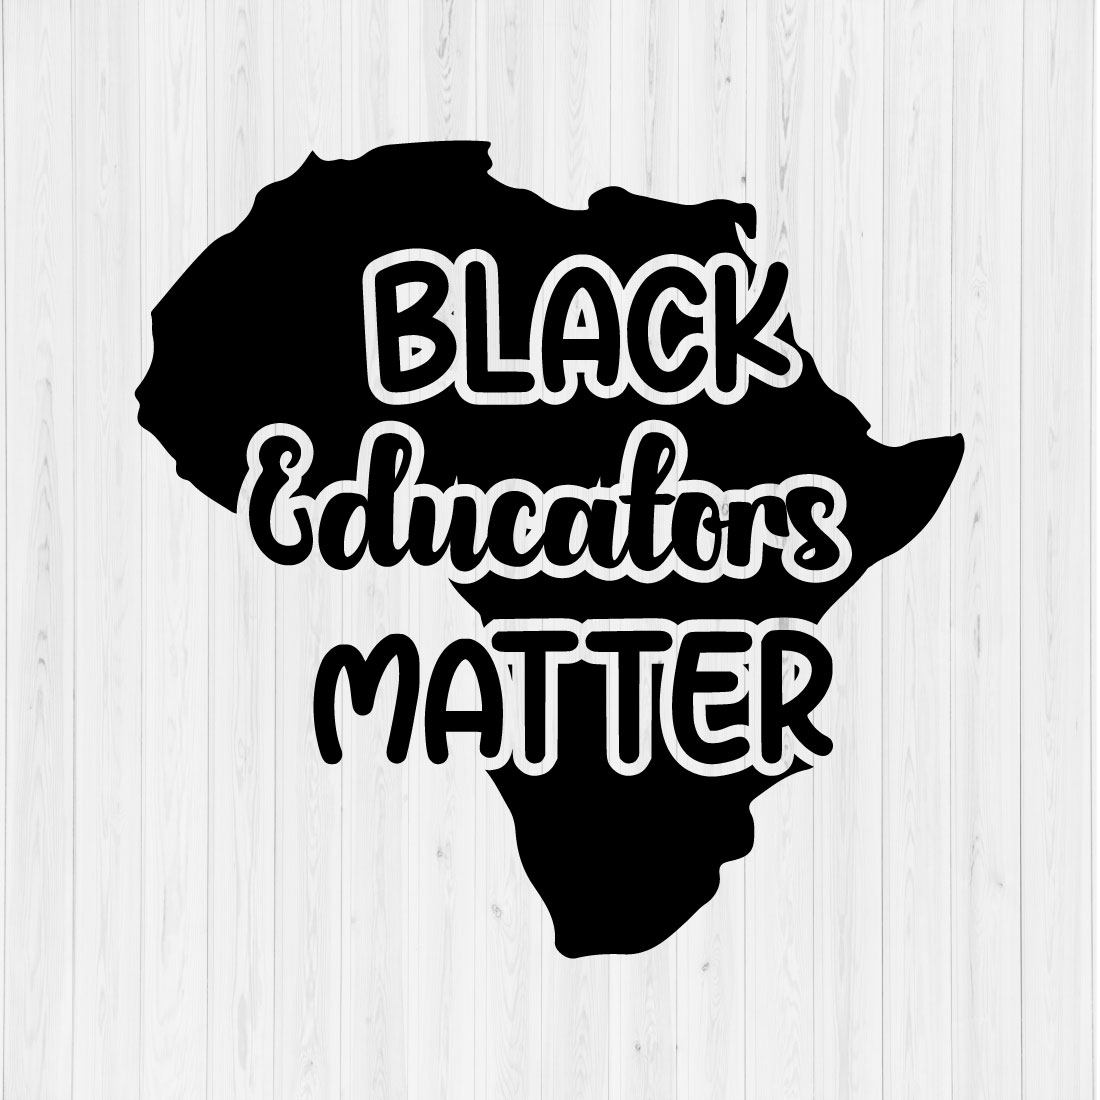 Black Educators Matter preview image.